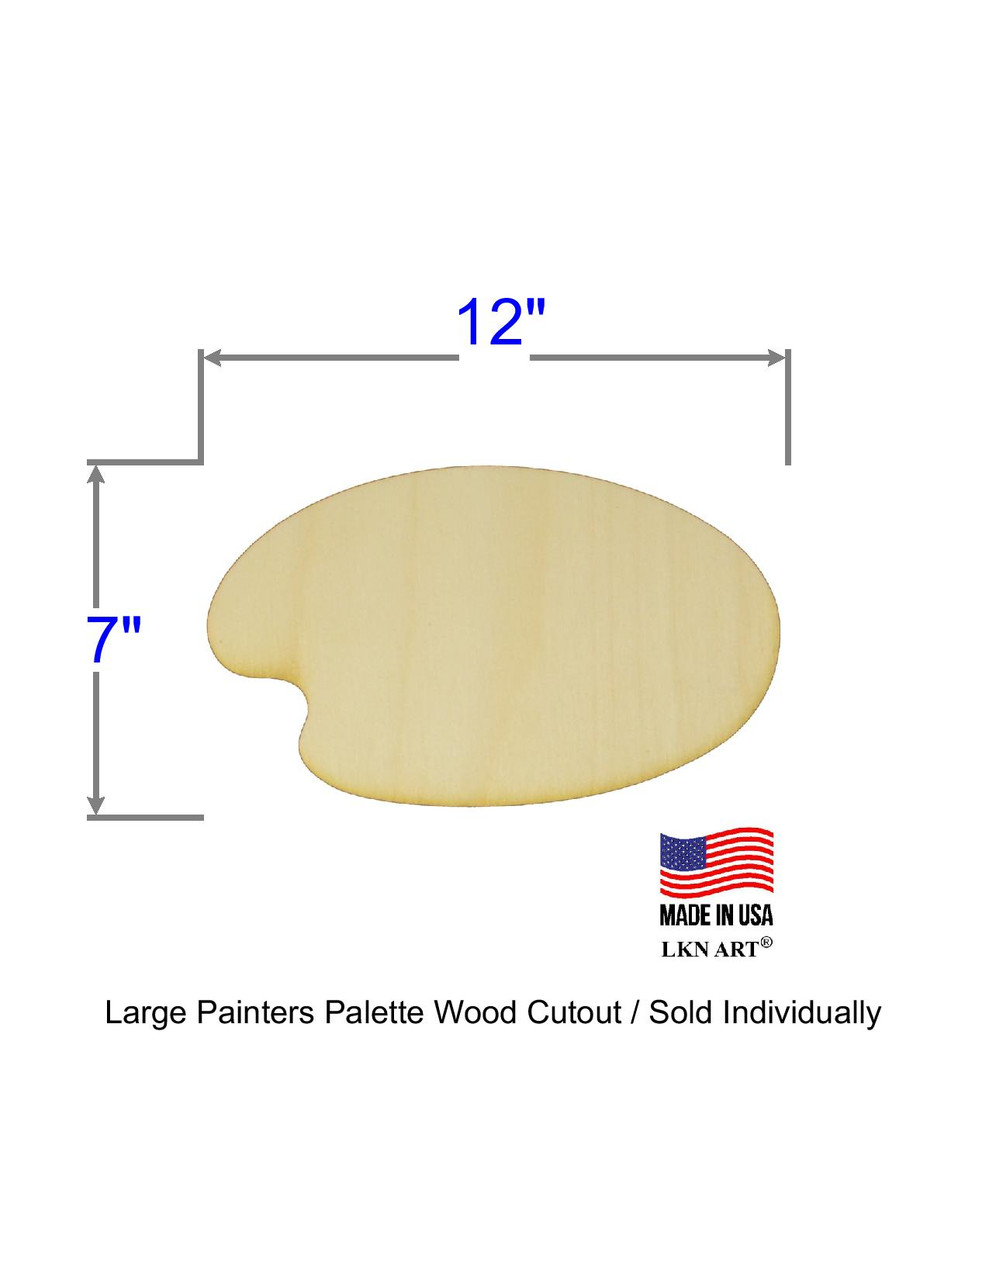 Painters Palette Wood Cutout - Medium 8 x 4.75 1/4 Baltic Birch Plywood